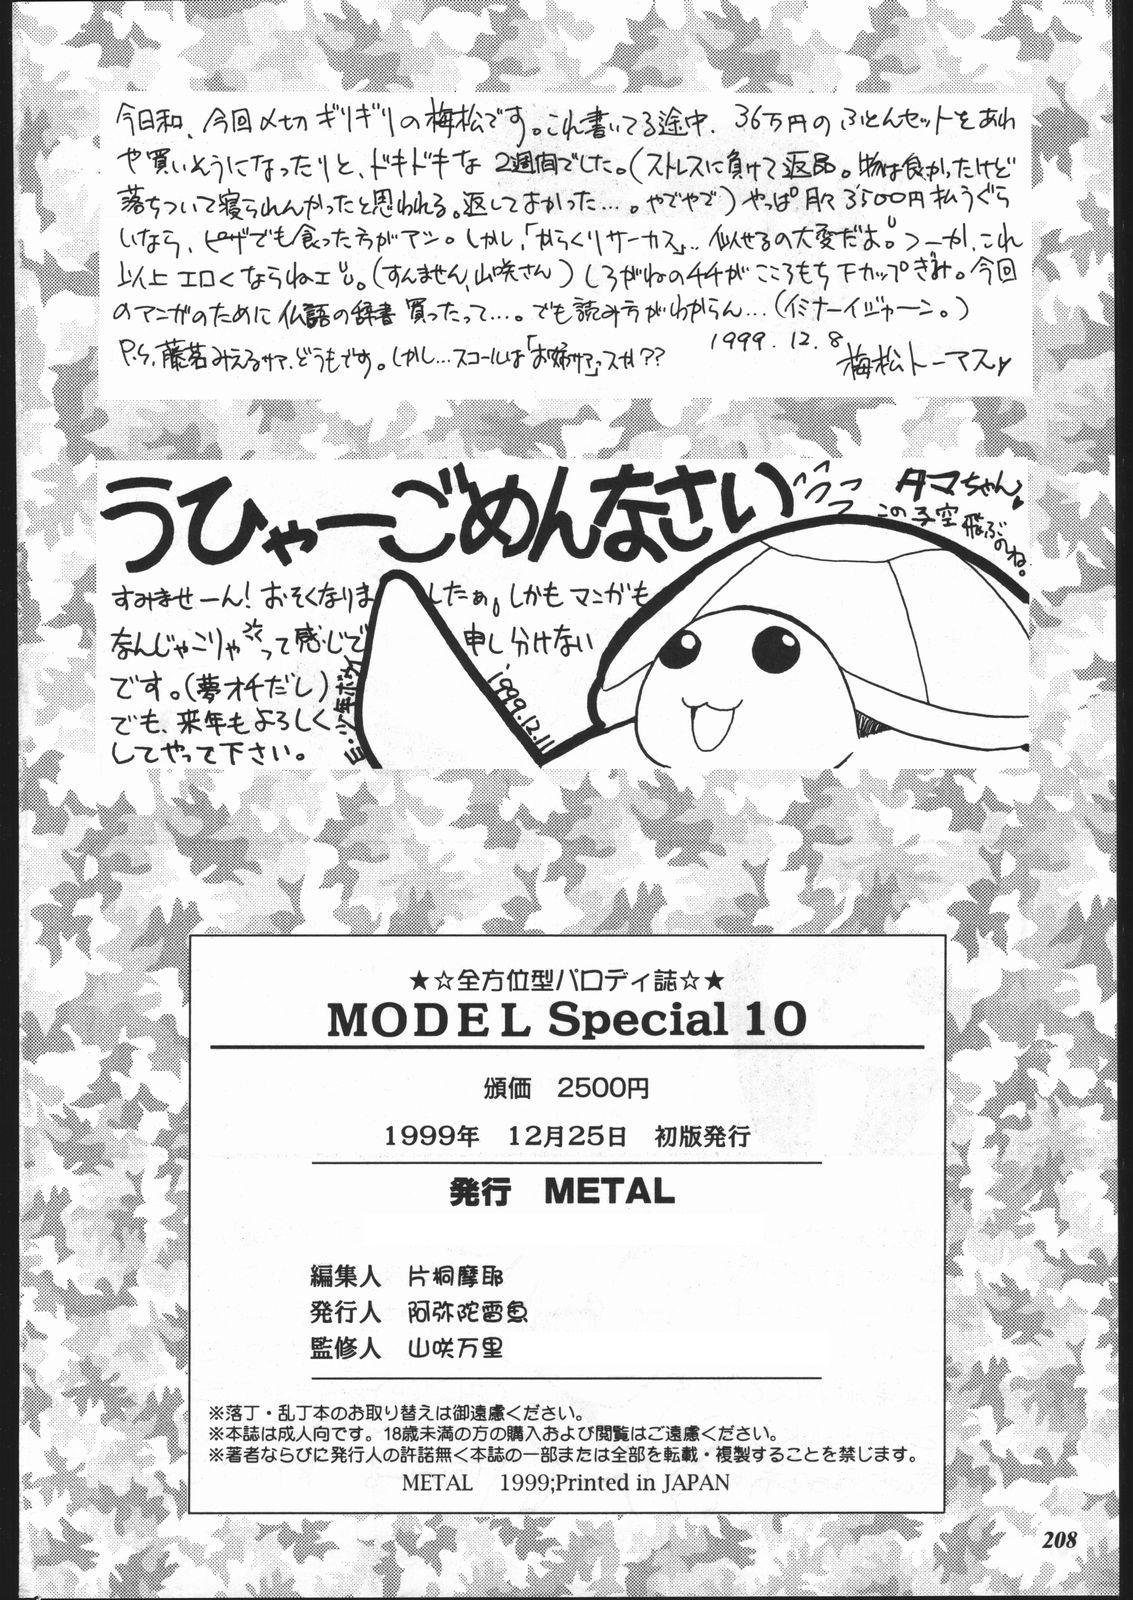 MODEL SPECIAL 10 205